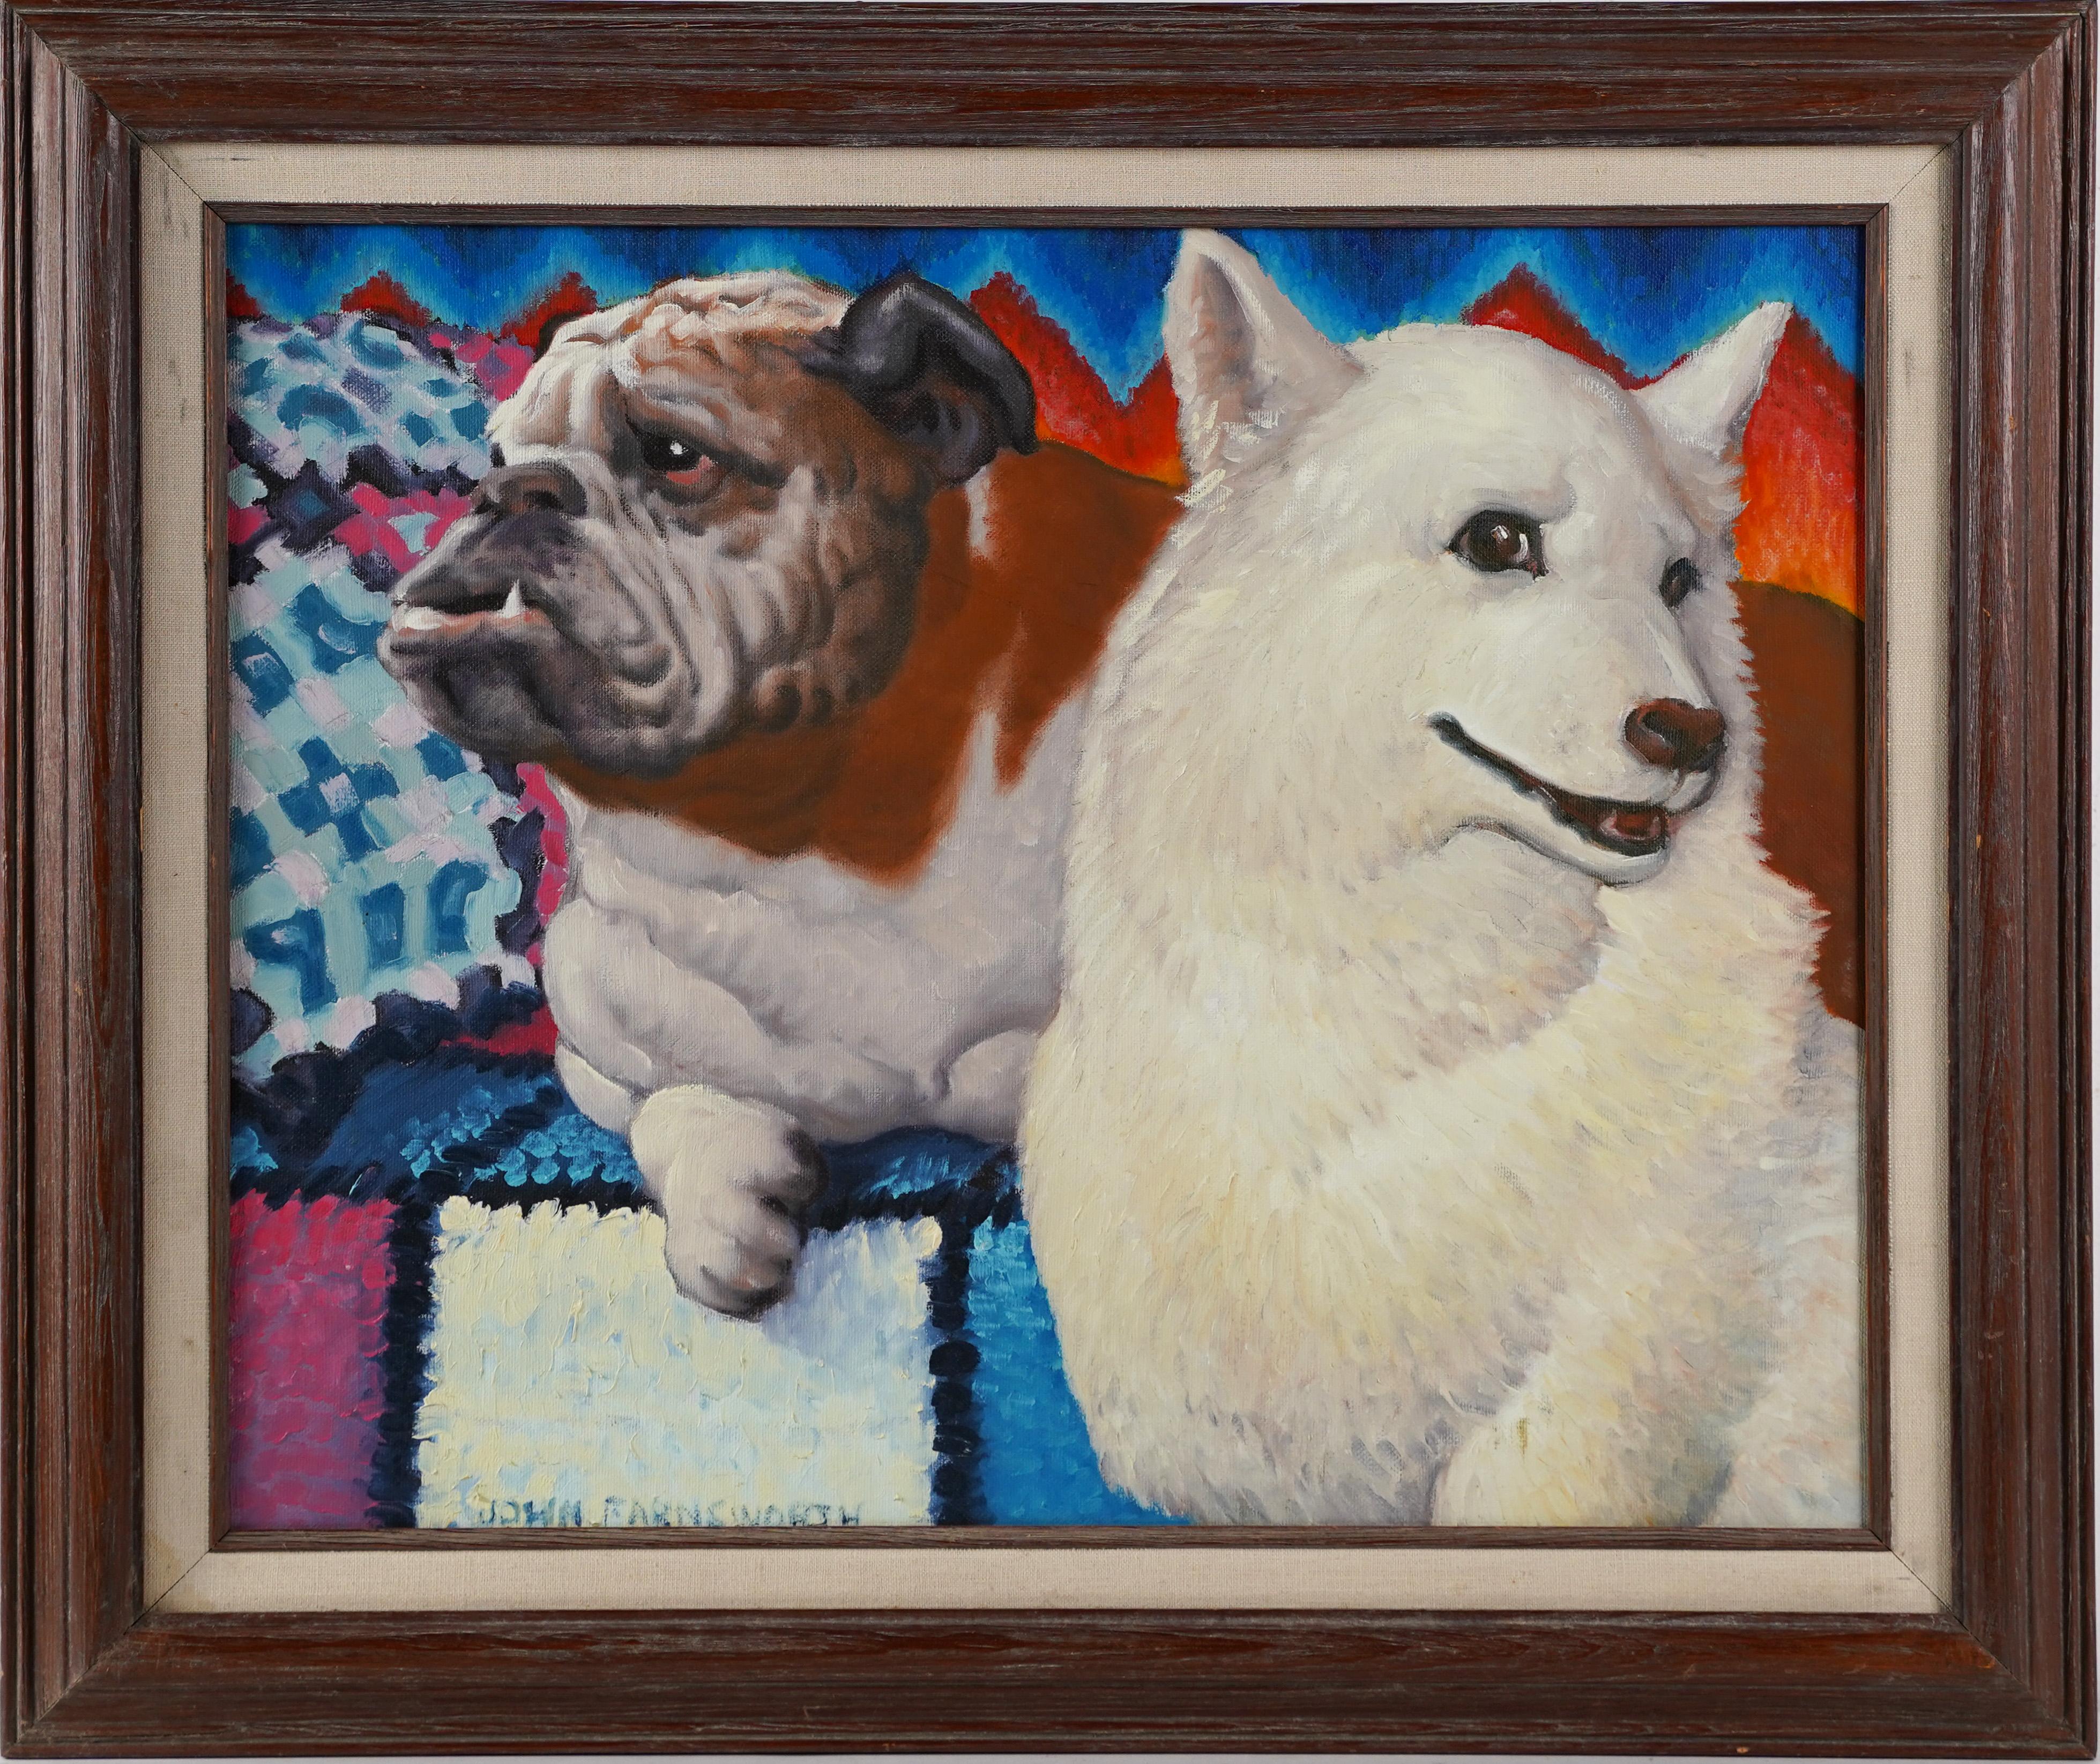 John Farnsworth Abstract Painting - Vintage American Modernist Pop Art Bulldog Animal Portrait Signed Oil Painting